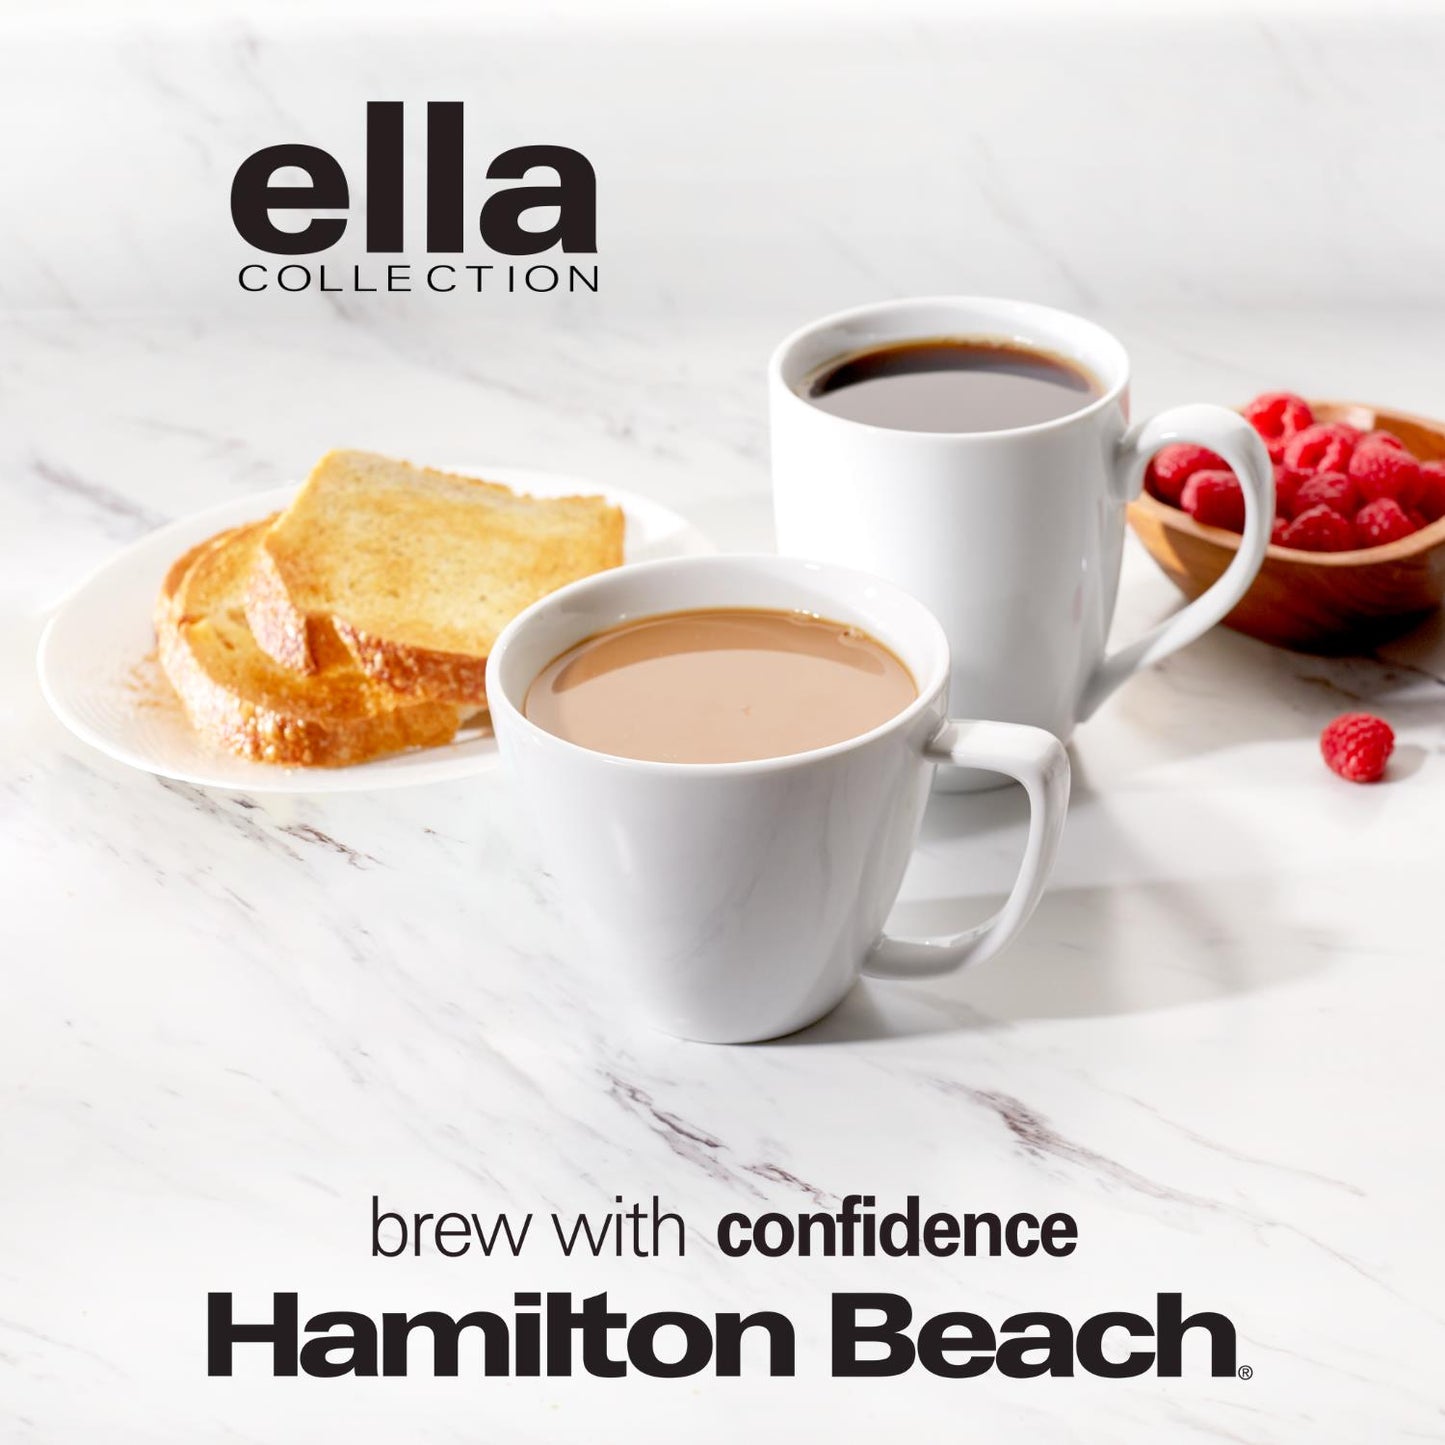 Hamilton Beach Ella Black Breakfast Bundle